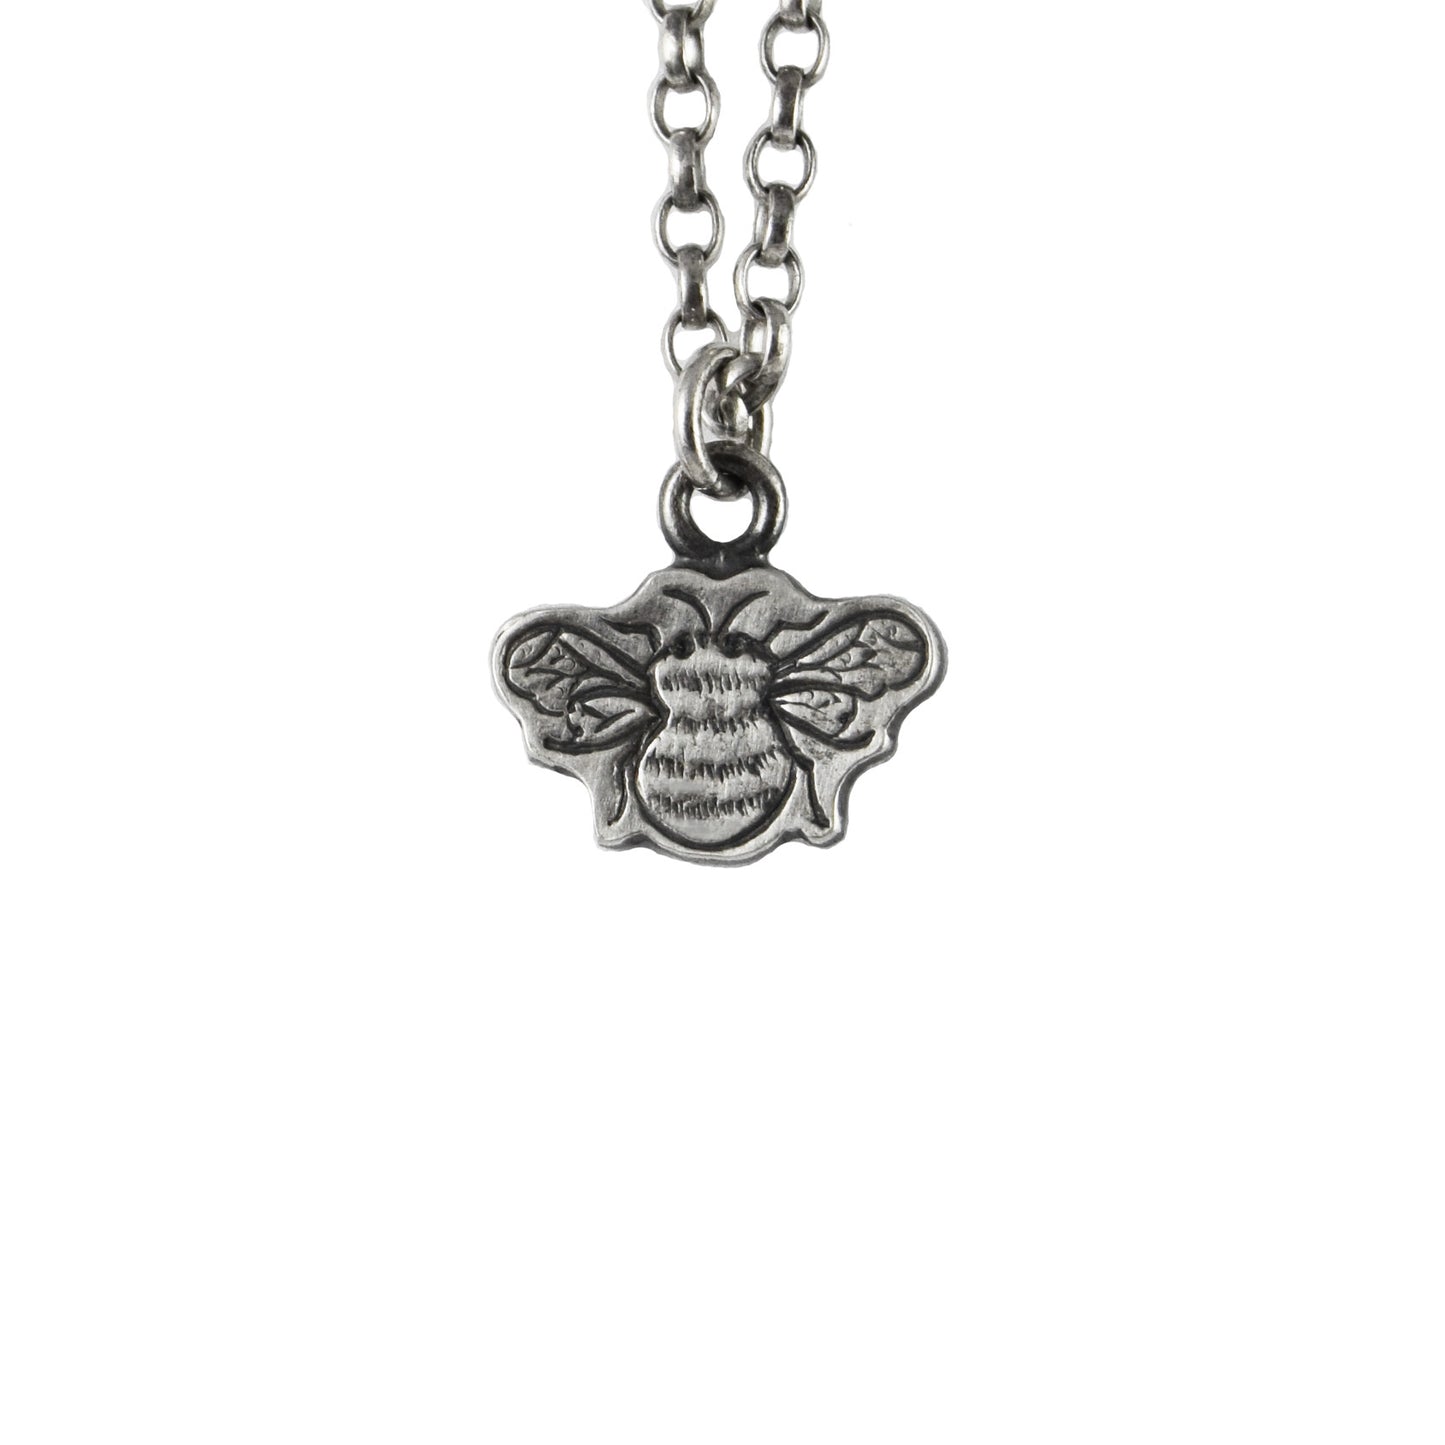 The Bumblebee Maiden pendant